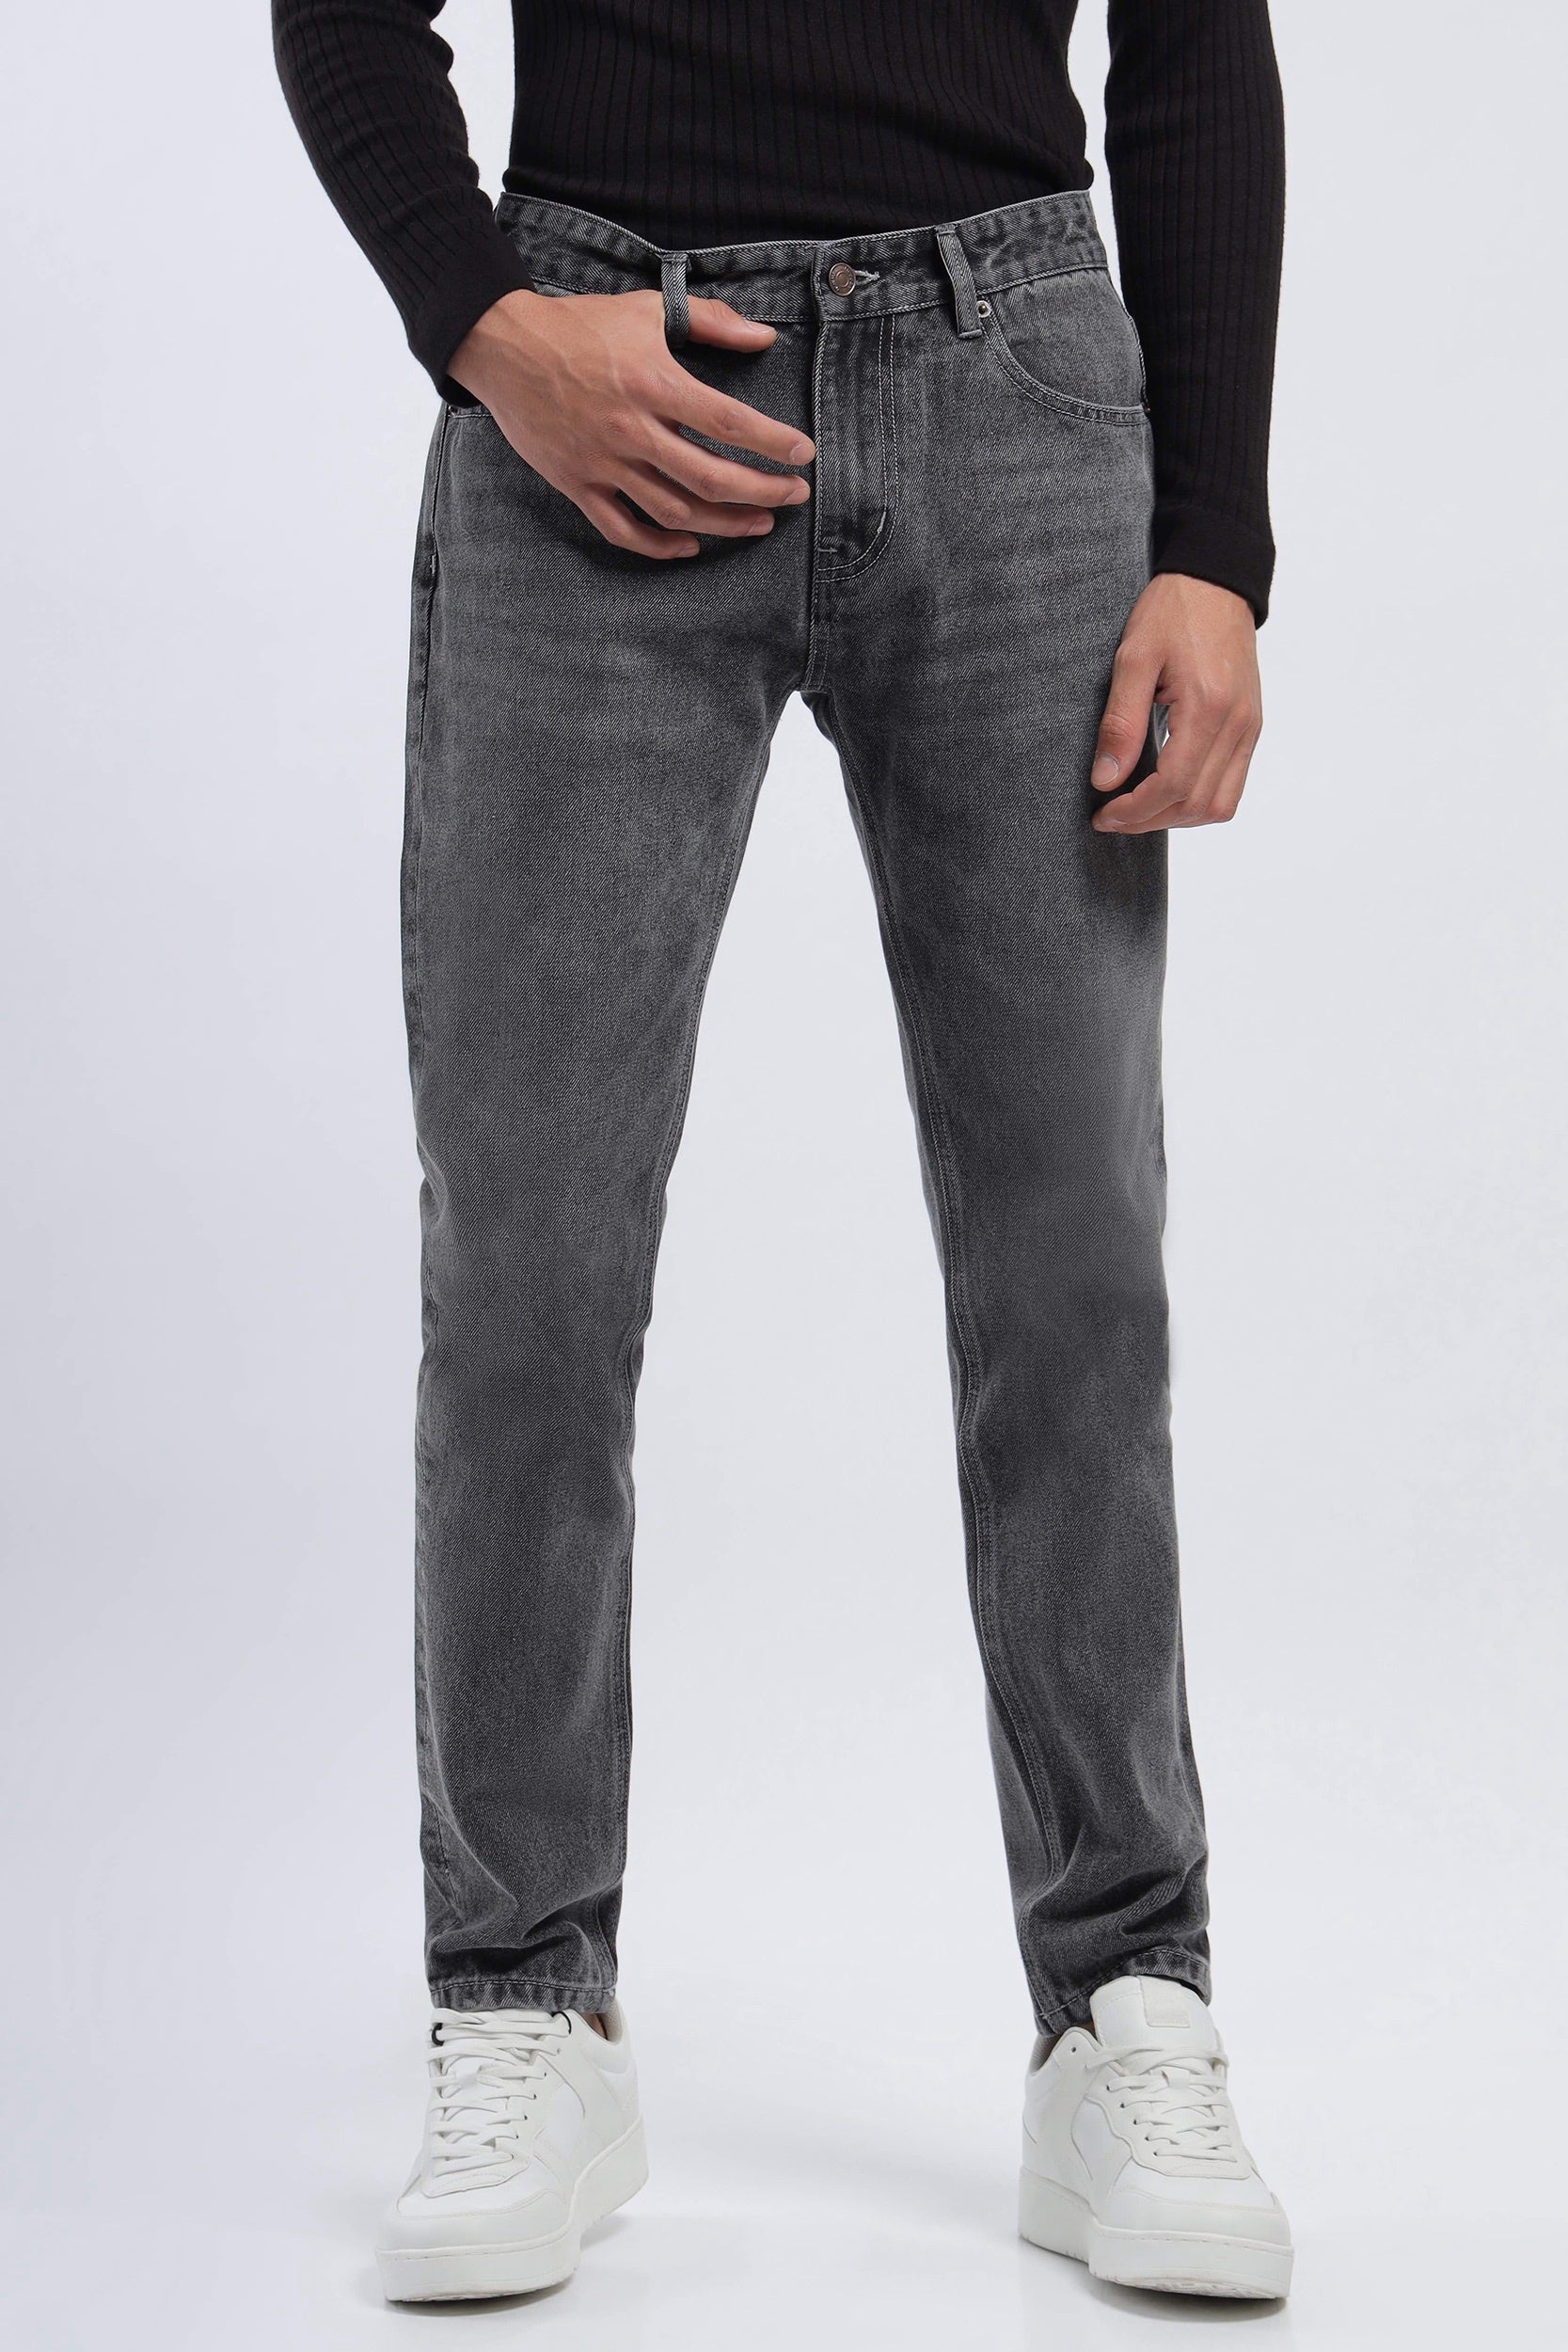 GD004 Mid Grey Fit Jeans Noggah Denims